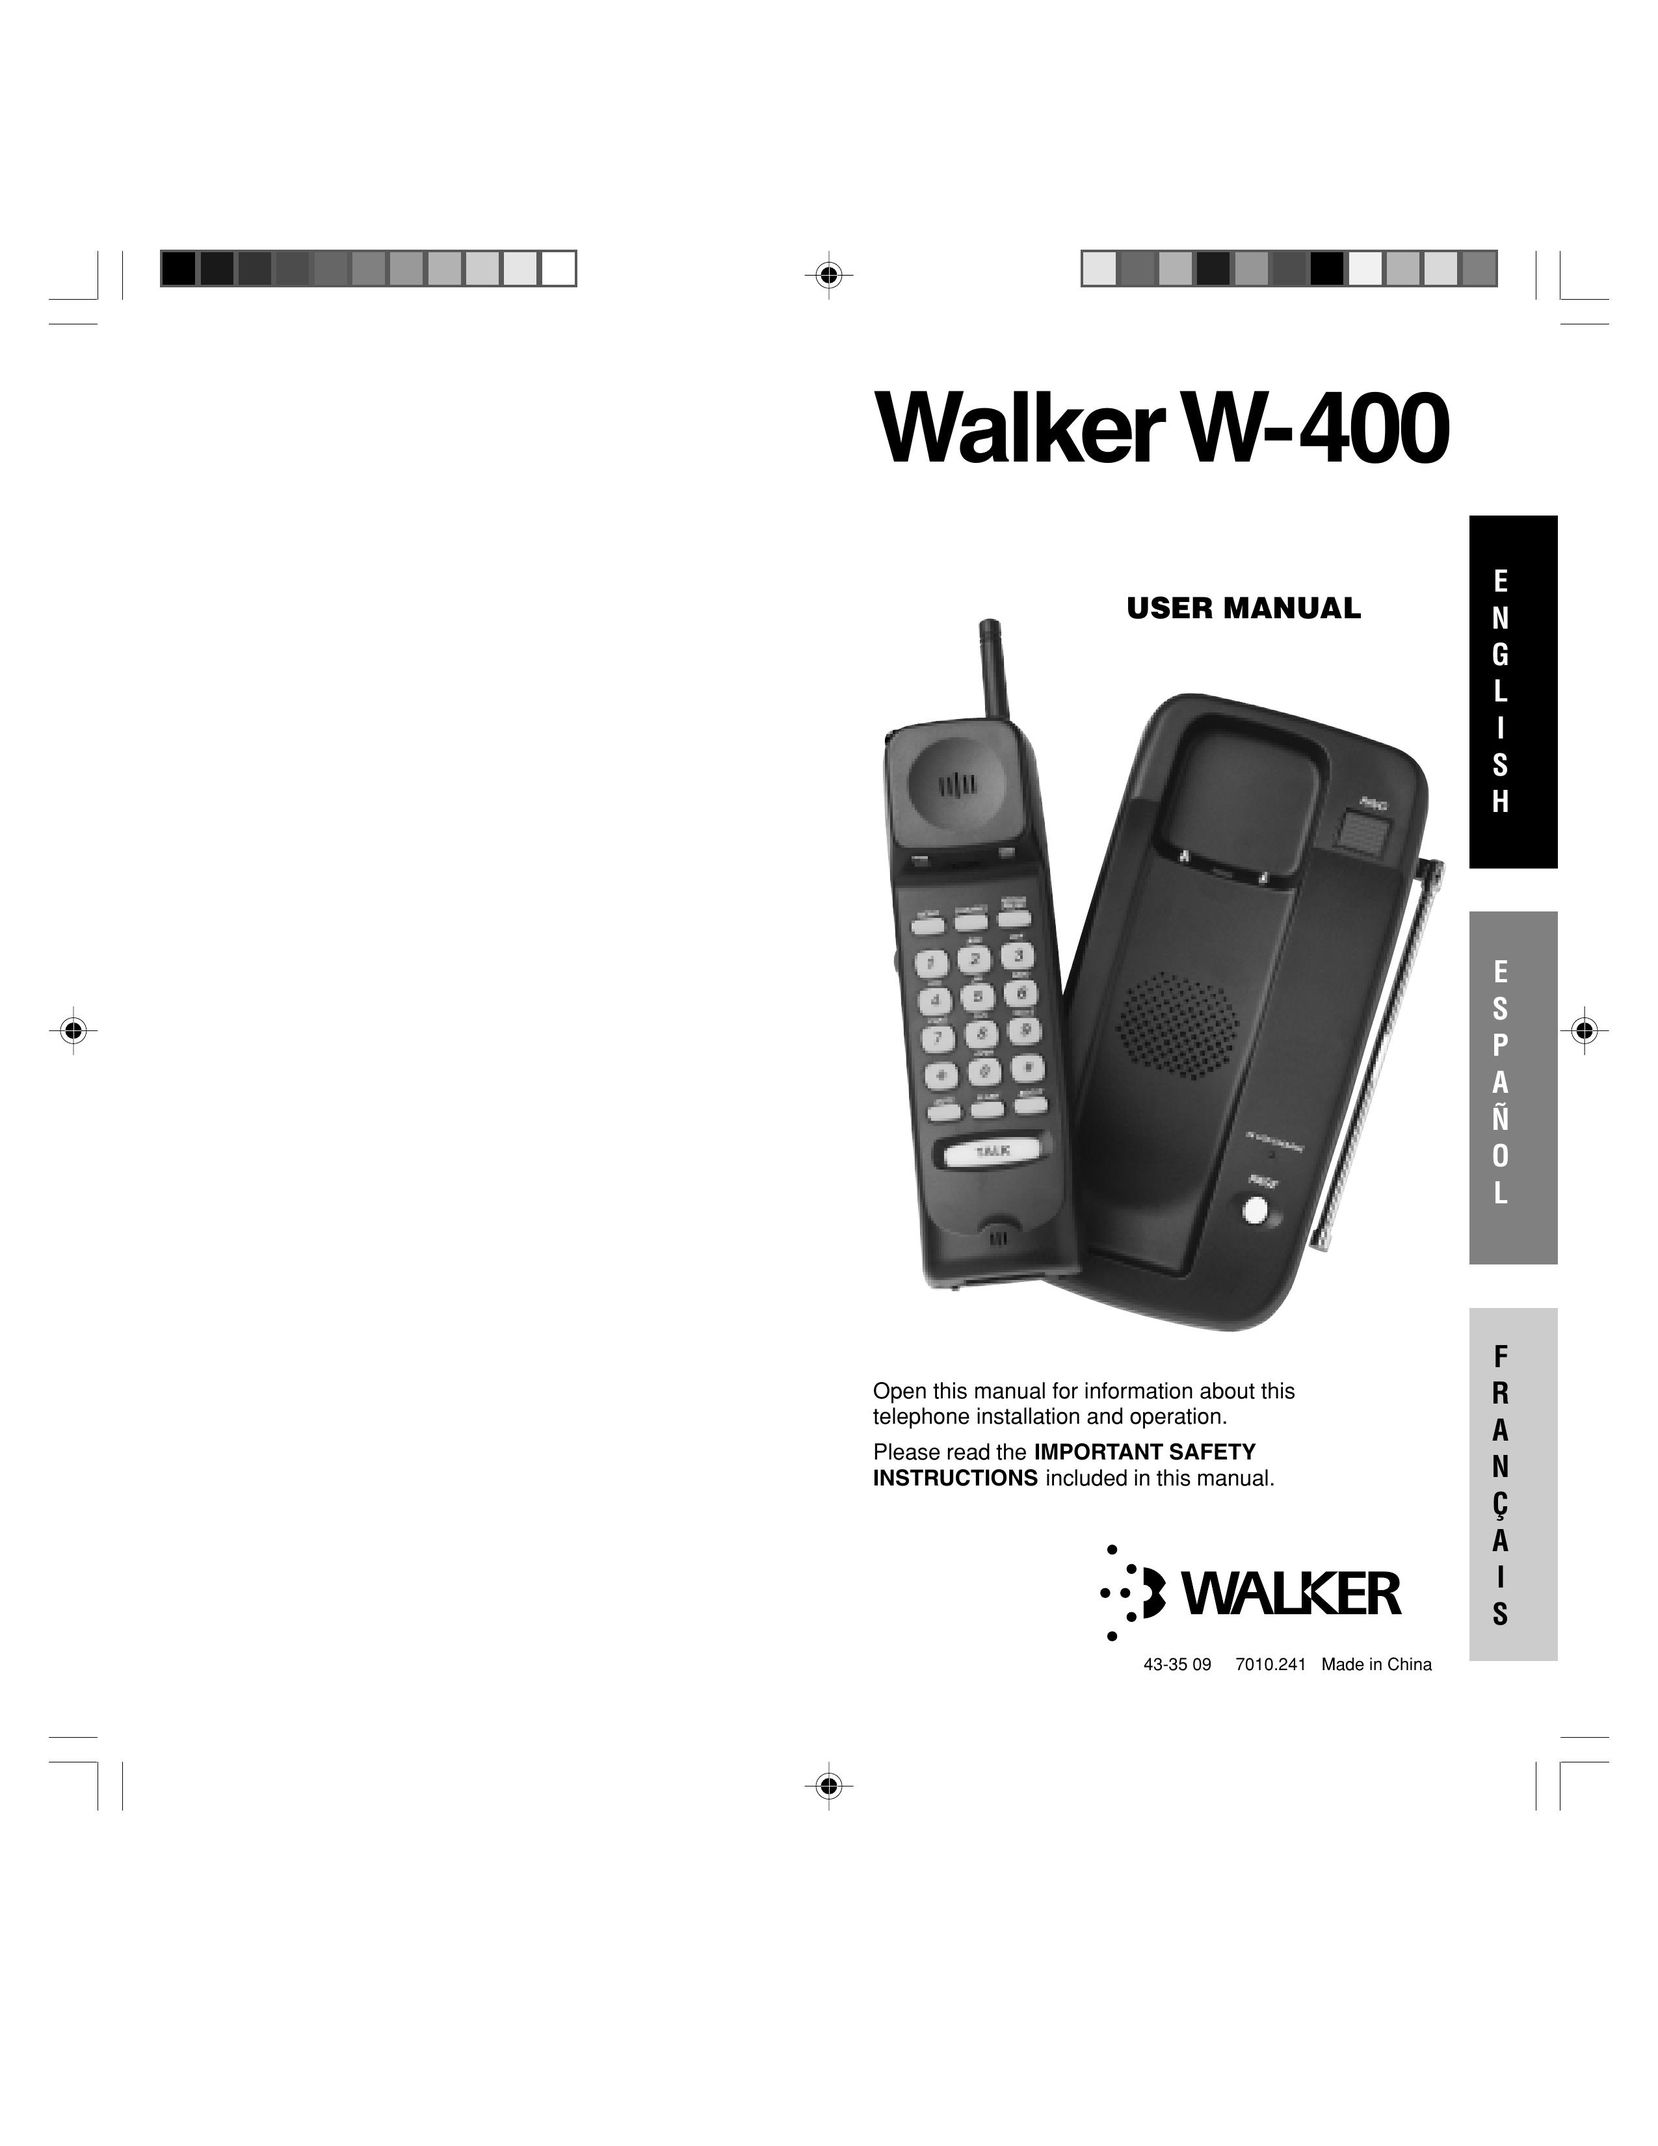 Walker W-400 Cordless Telephone User Manual